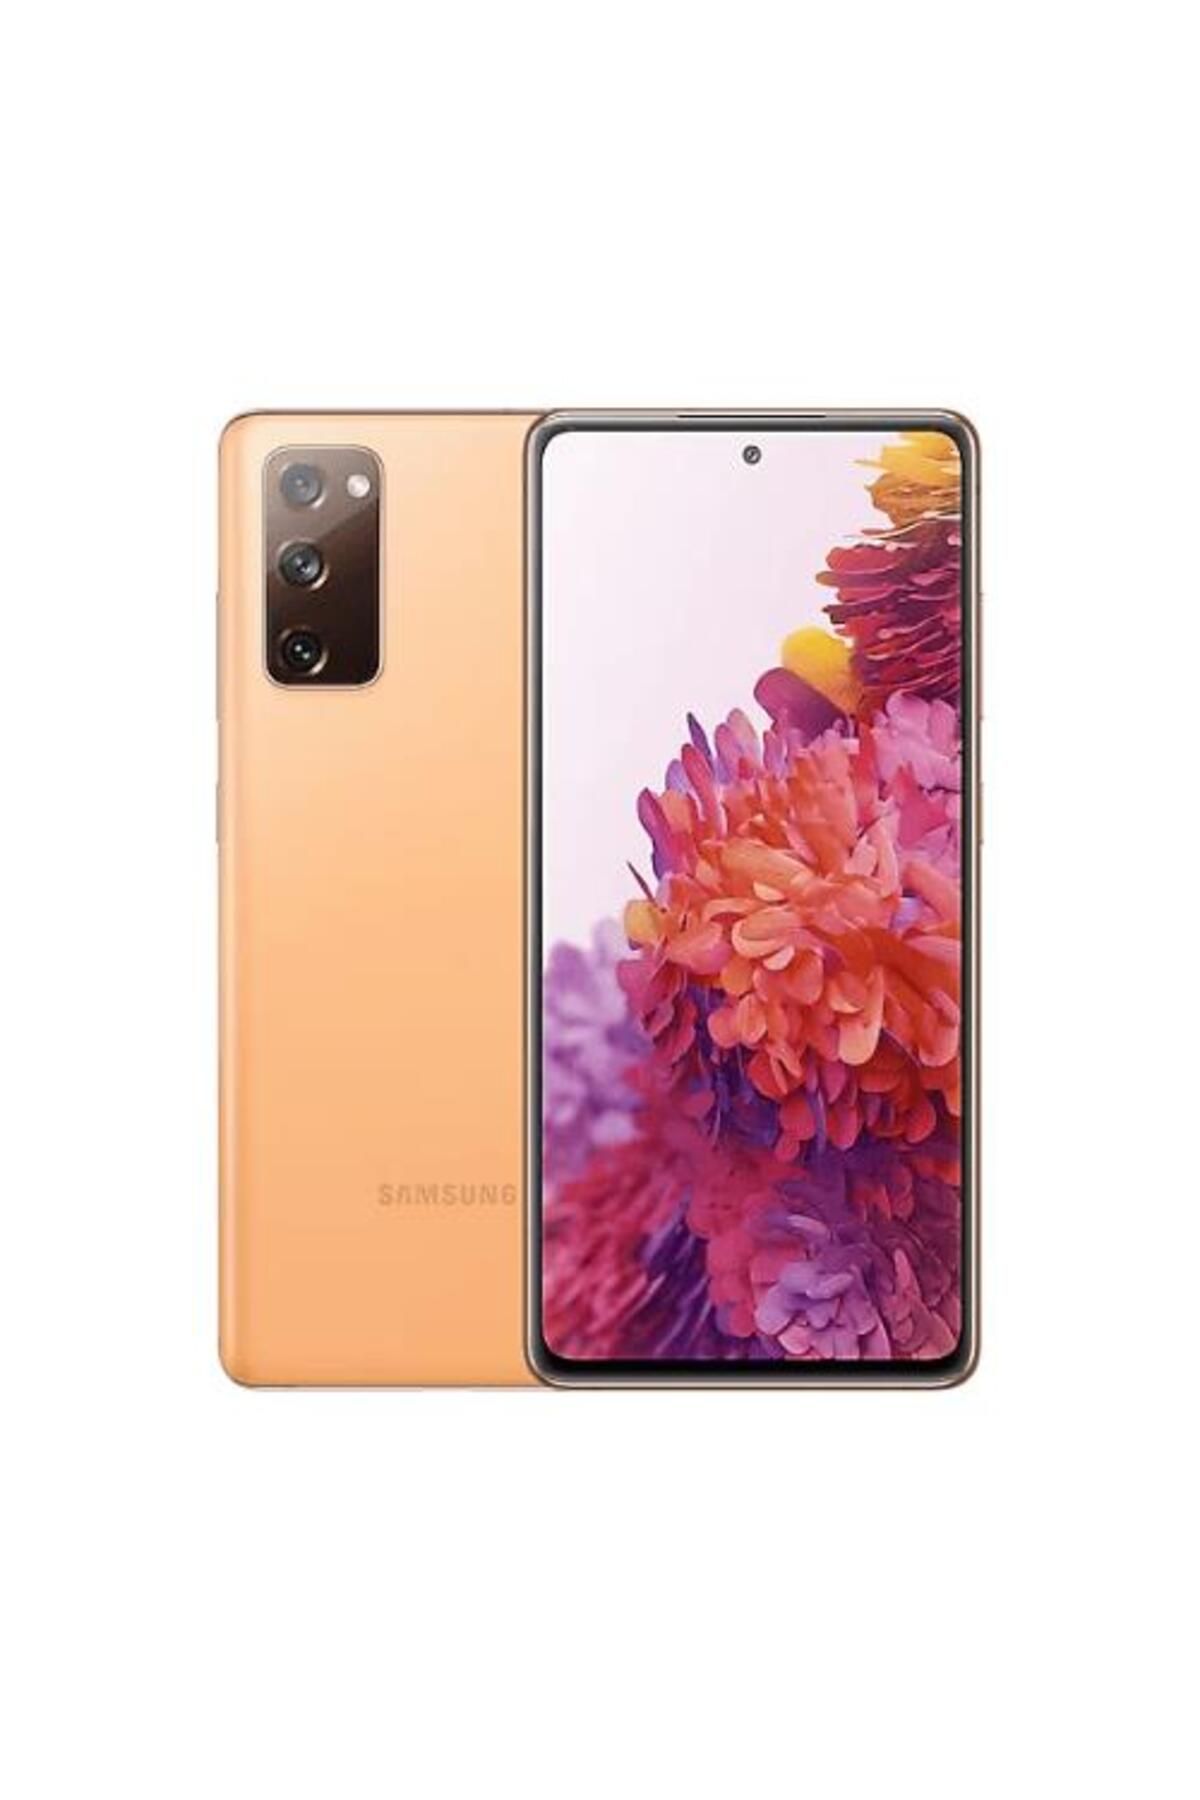 Samsung Yenilenmiş Galaxy S20 Fe 128gb -a Kalite- Turuncu